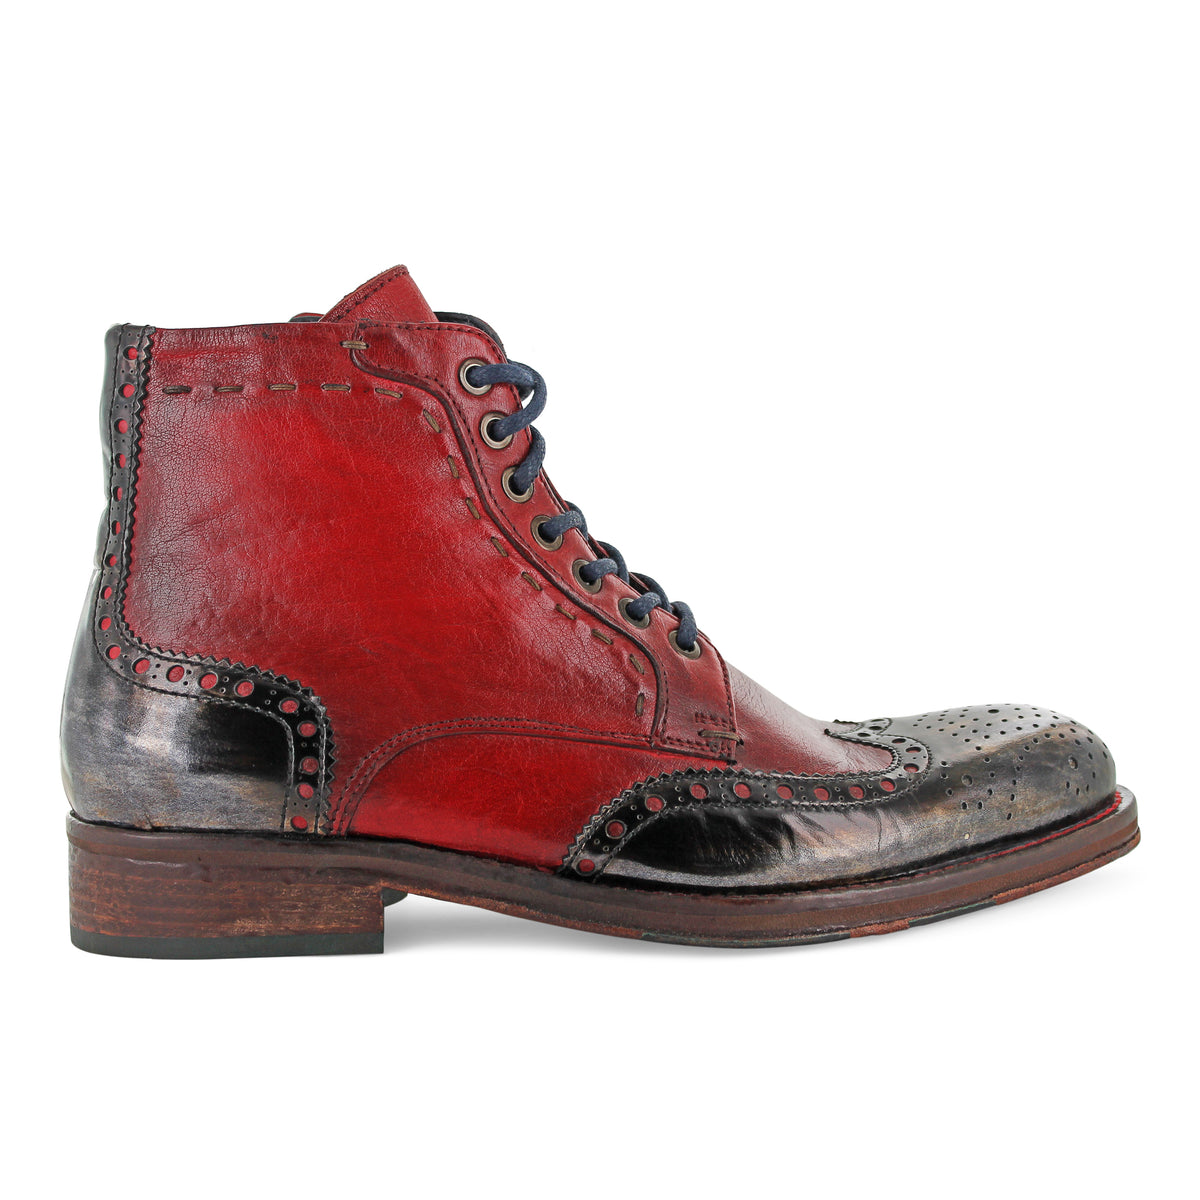 6320 - Red Brogue Boot With Metallic Toe Cap